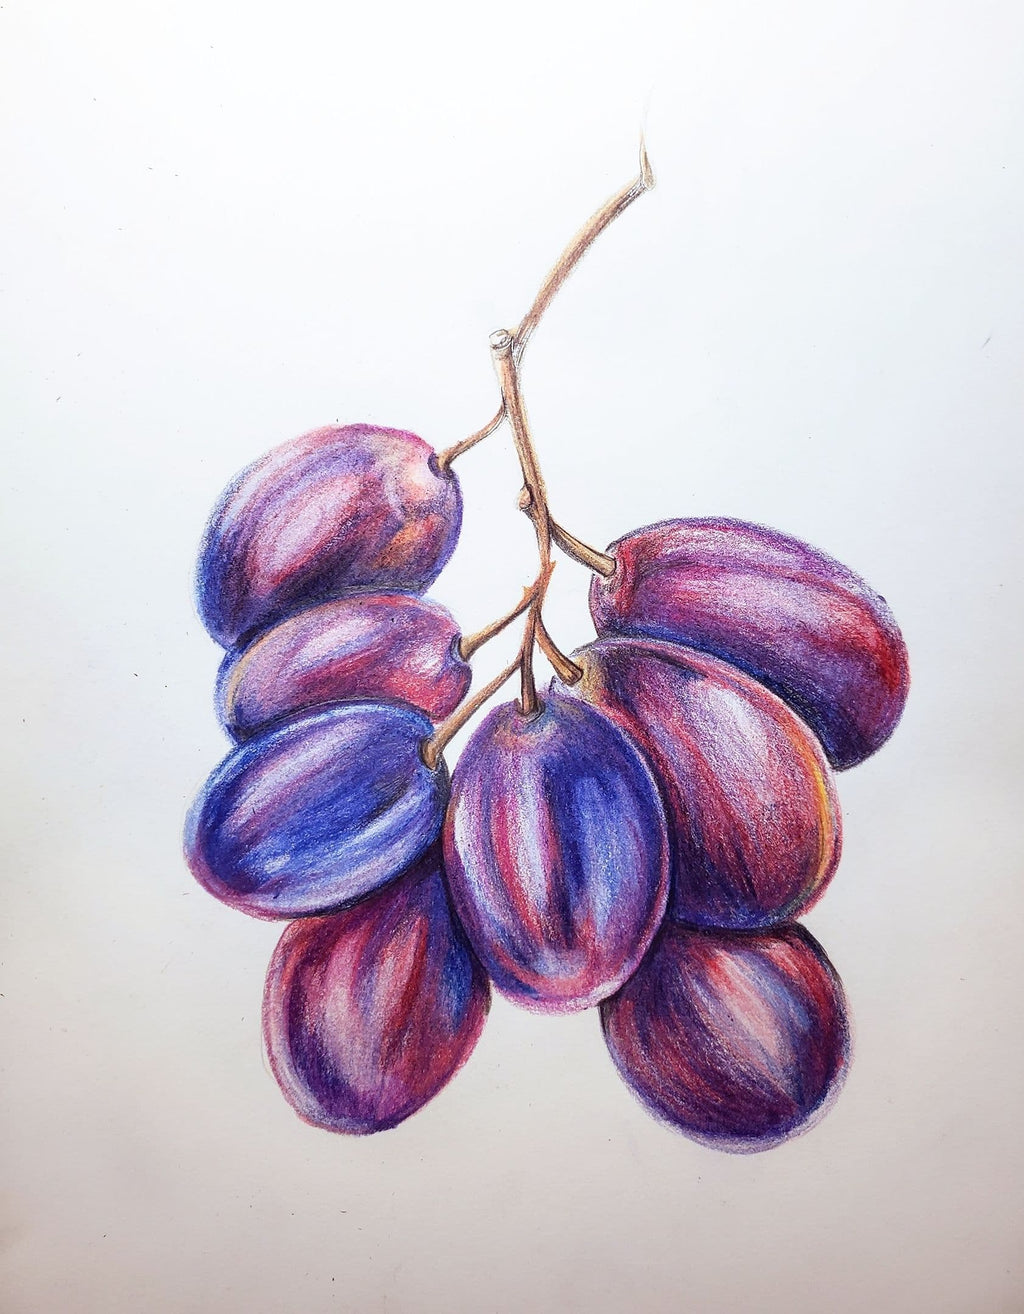 grapes sketches